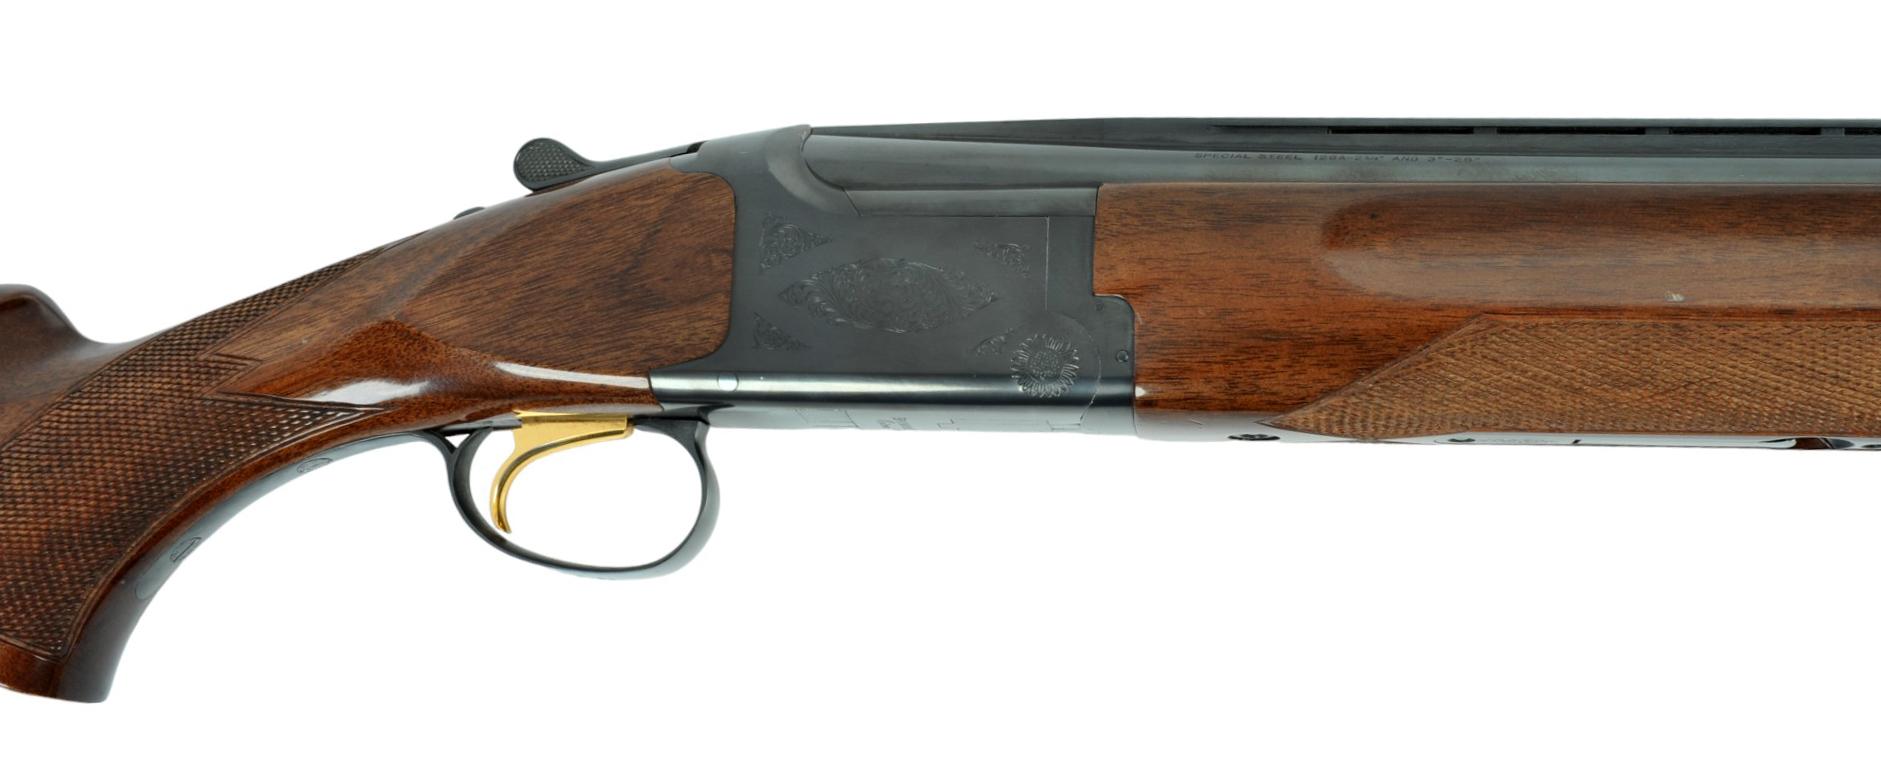 Browning Citori 12 Ga 2 3/4" & 3" Over/Under Shotgun - FFL # 03162PR153 (BJS1)